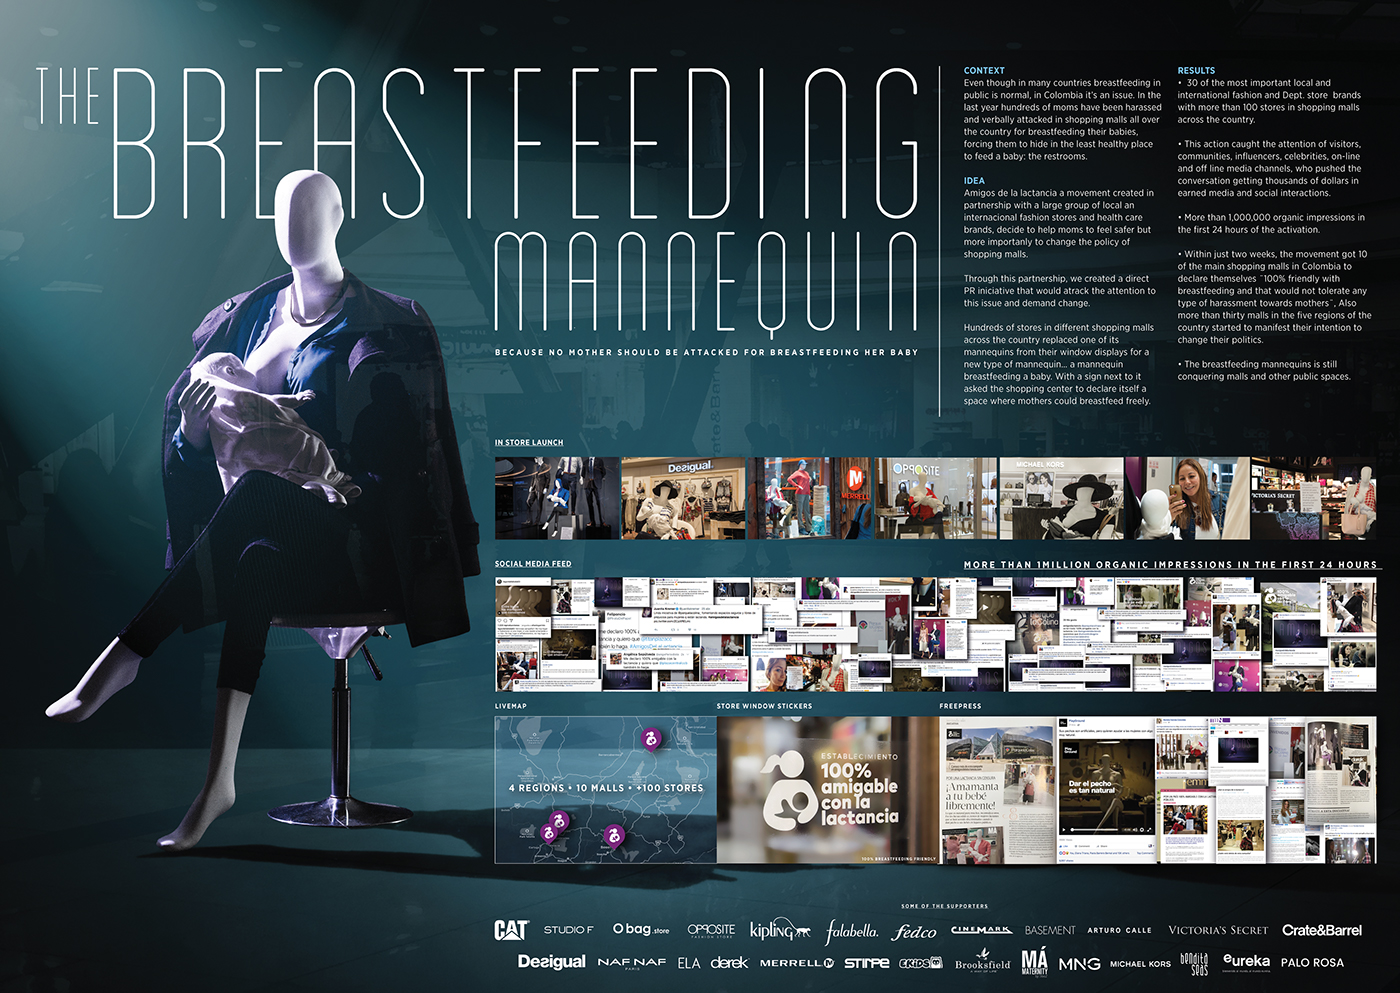 Advertising  Cannes lions breastfeeding mannequin #amigosdelalactancia